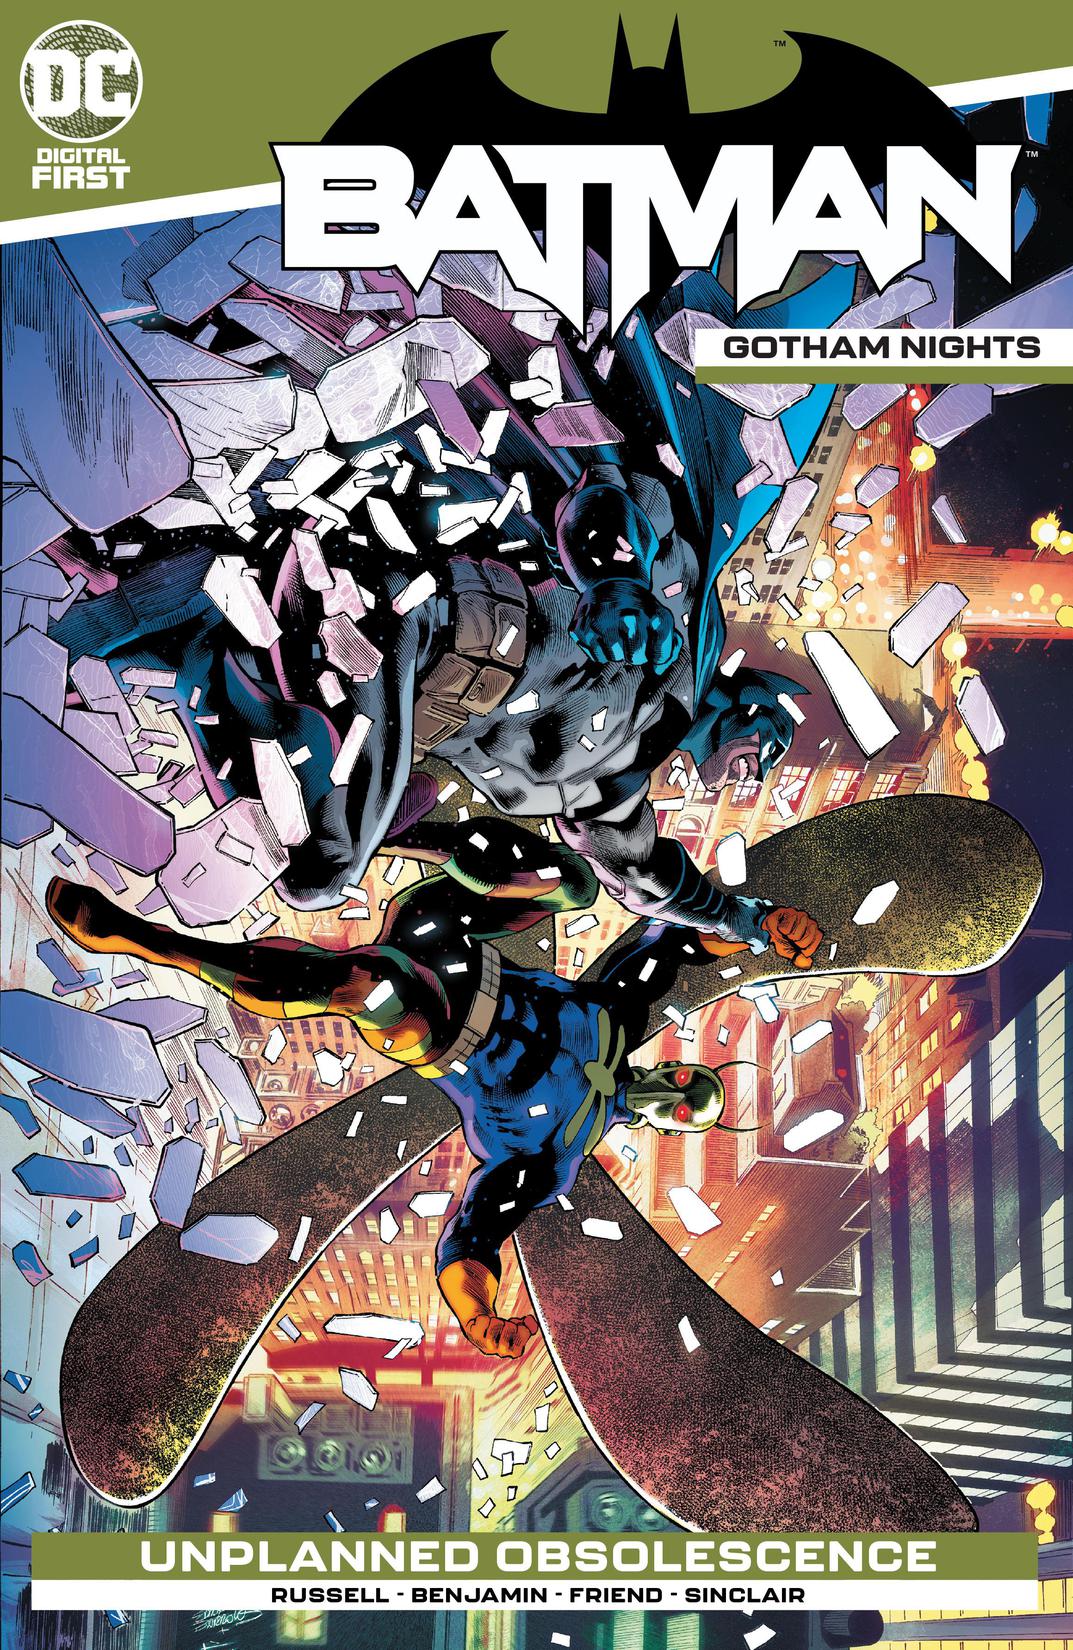 Batman: Gotham Nights #7 preview images